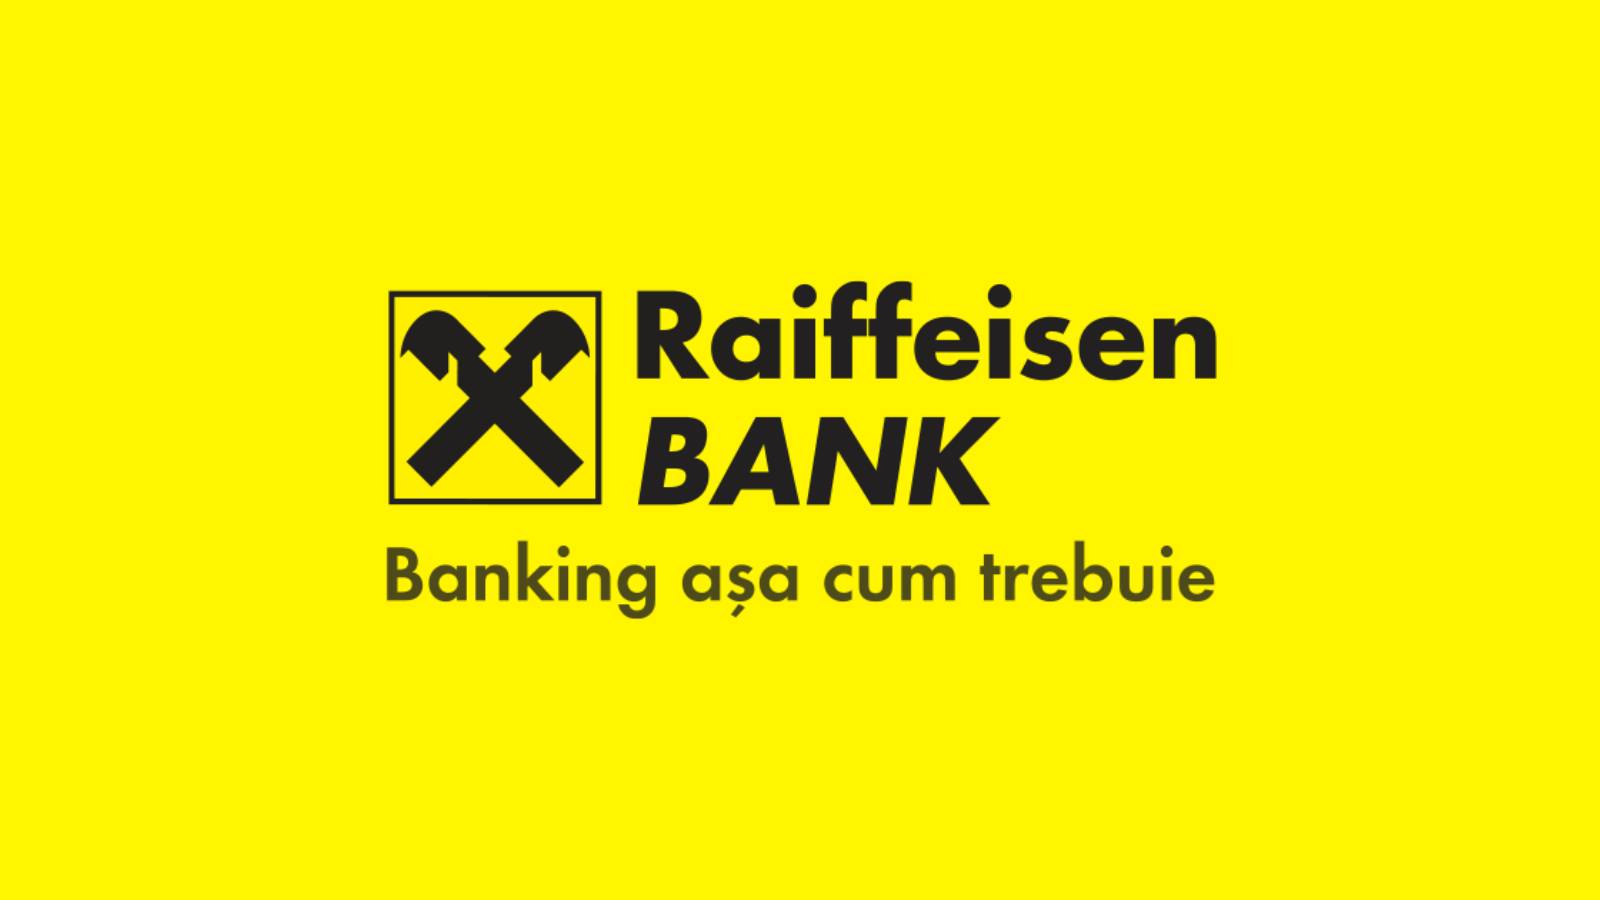 Raiffeisen Bank Informazioni ufficiali GRATUITE per i clienti rumeni oggi